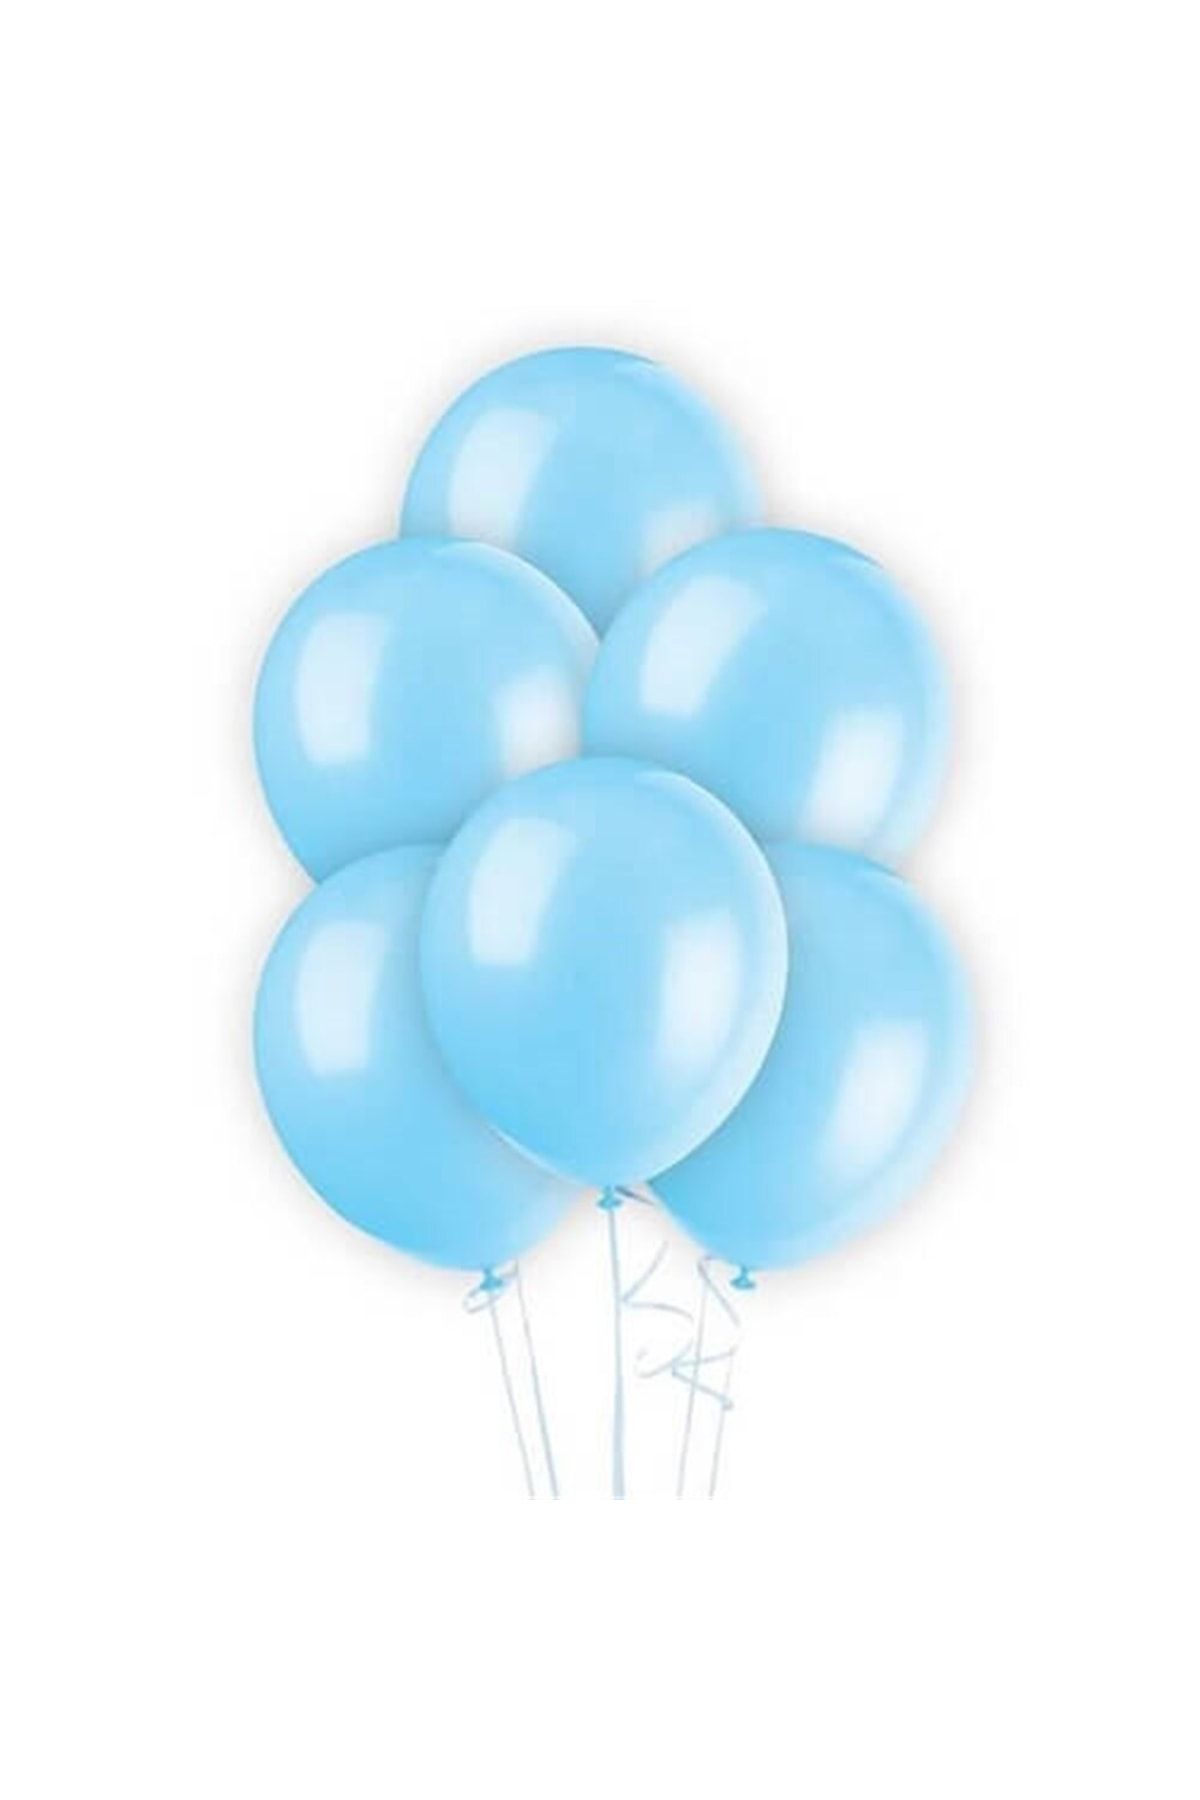 ECE PARTİ Metalik Balon Açık Mavi 10 'lu Paket